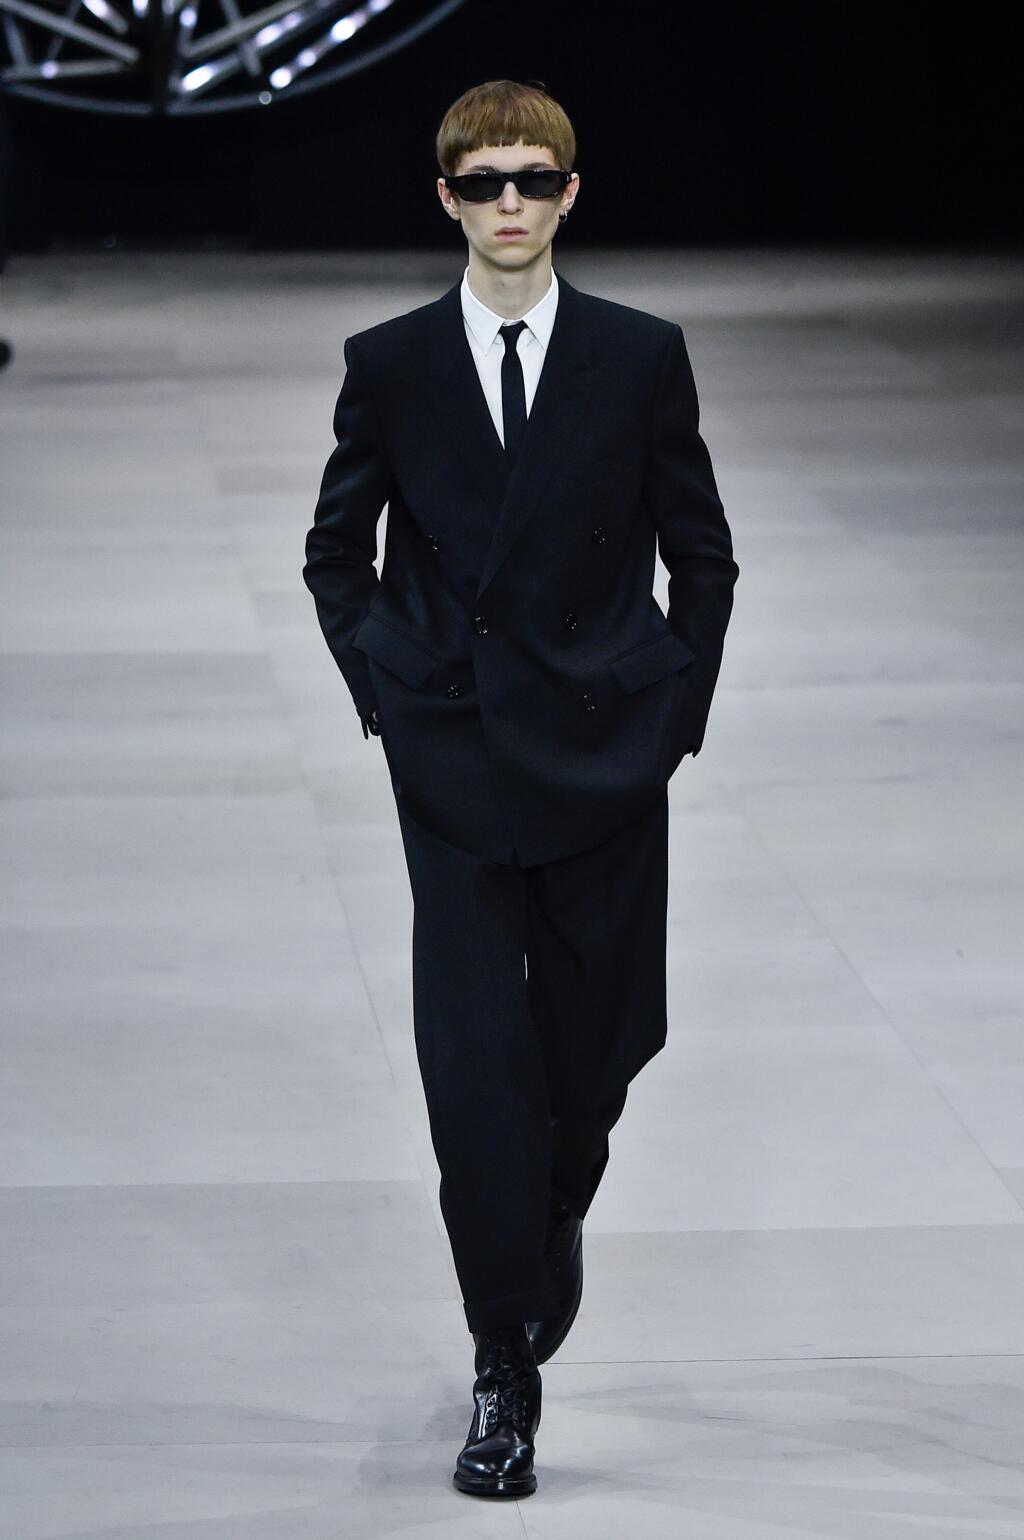 Fall Fashion: For men, 'Matrix'-inspired looks are season's big trends ...